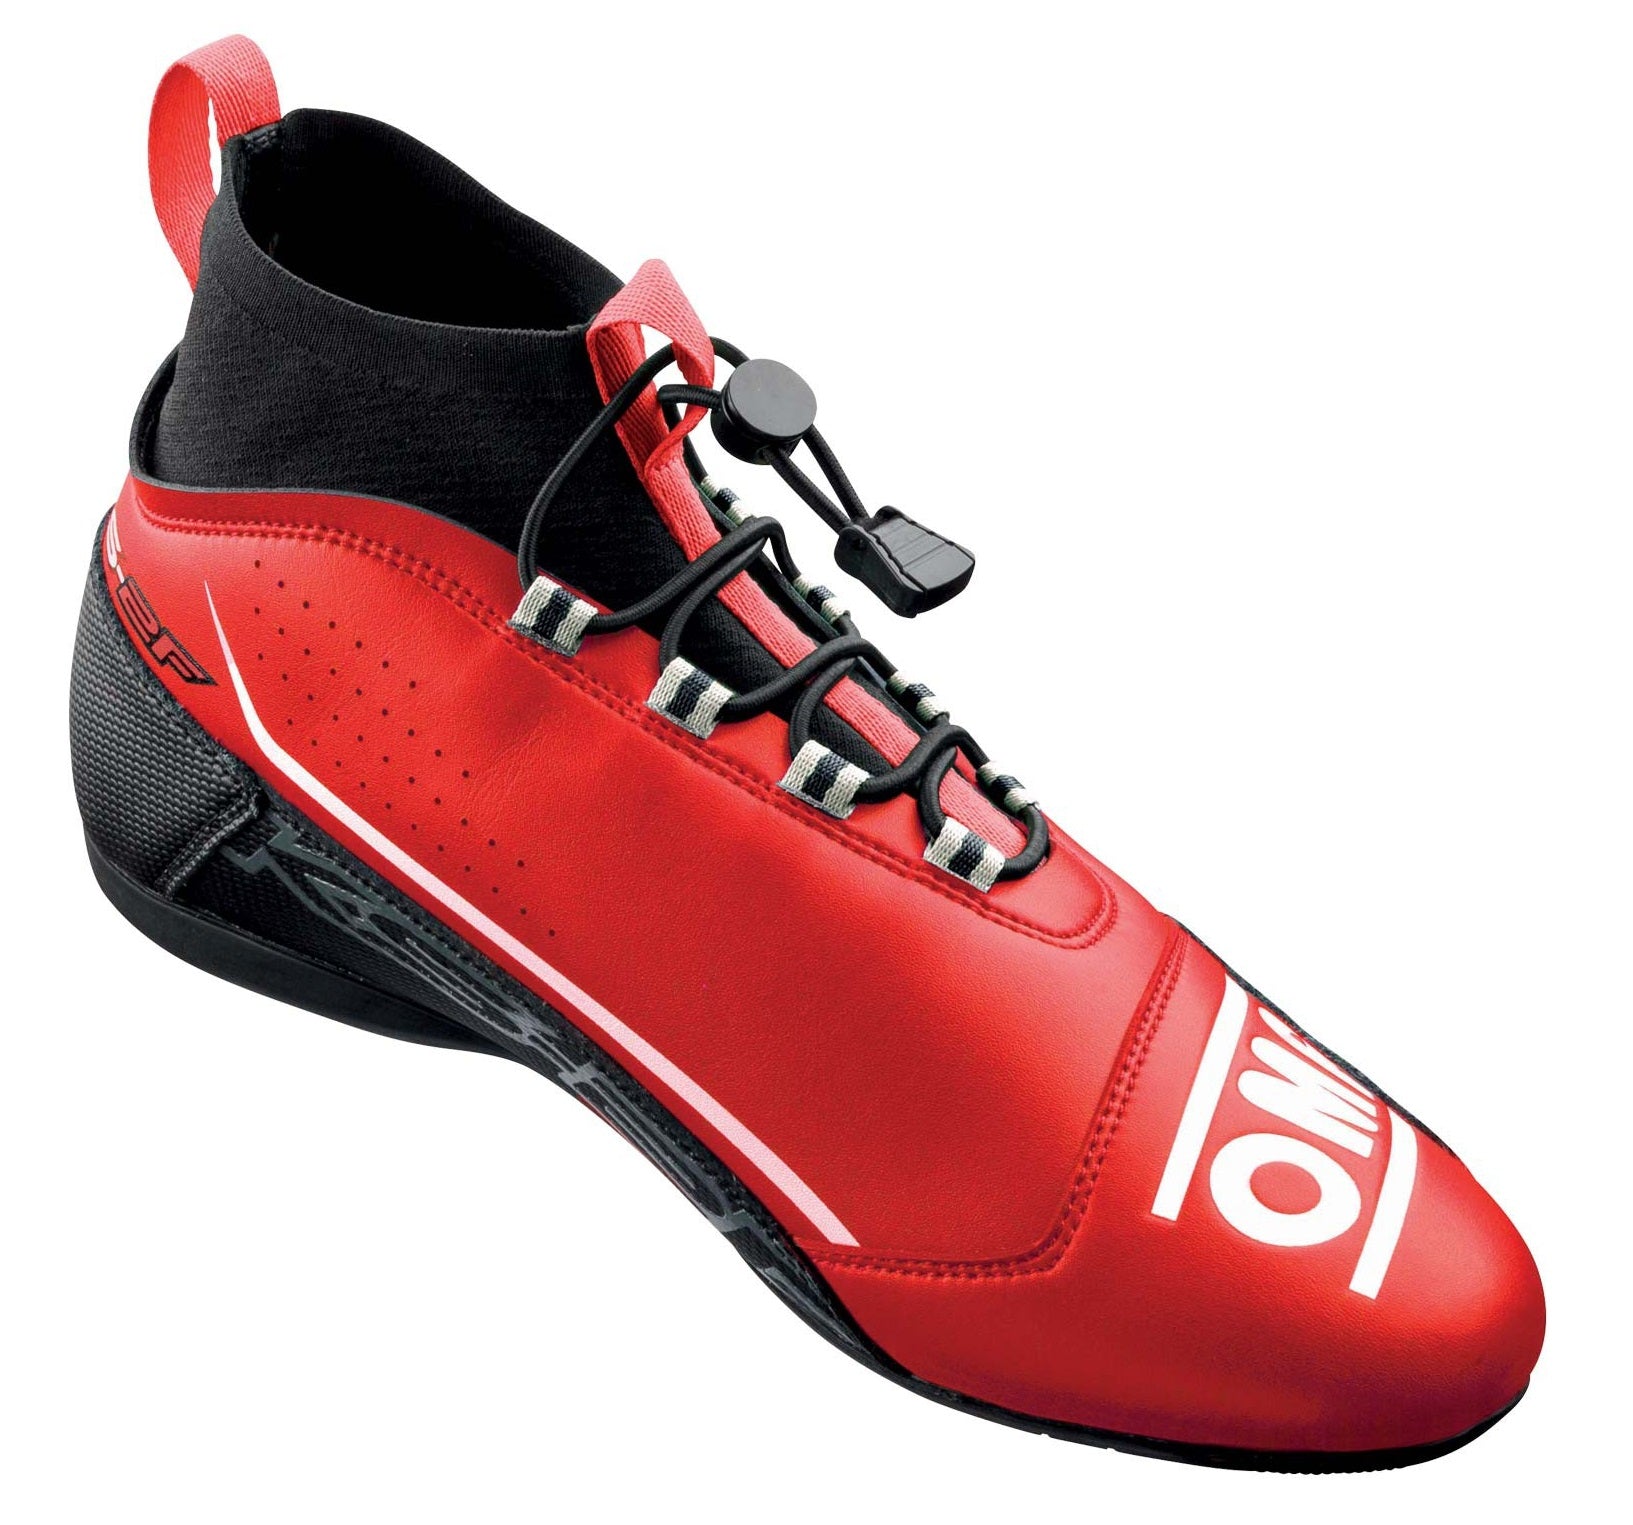 OMP KC0-0830-A01-060-43 KS-2F Karting shoes, red/black, size 43 Photo-1 